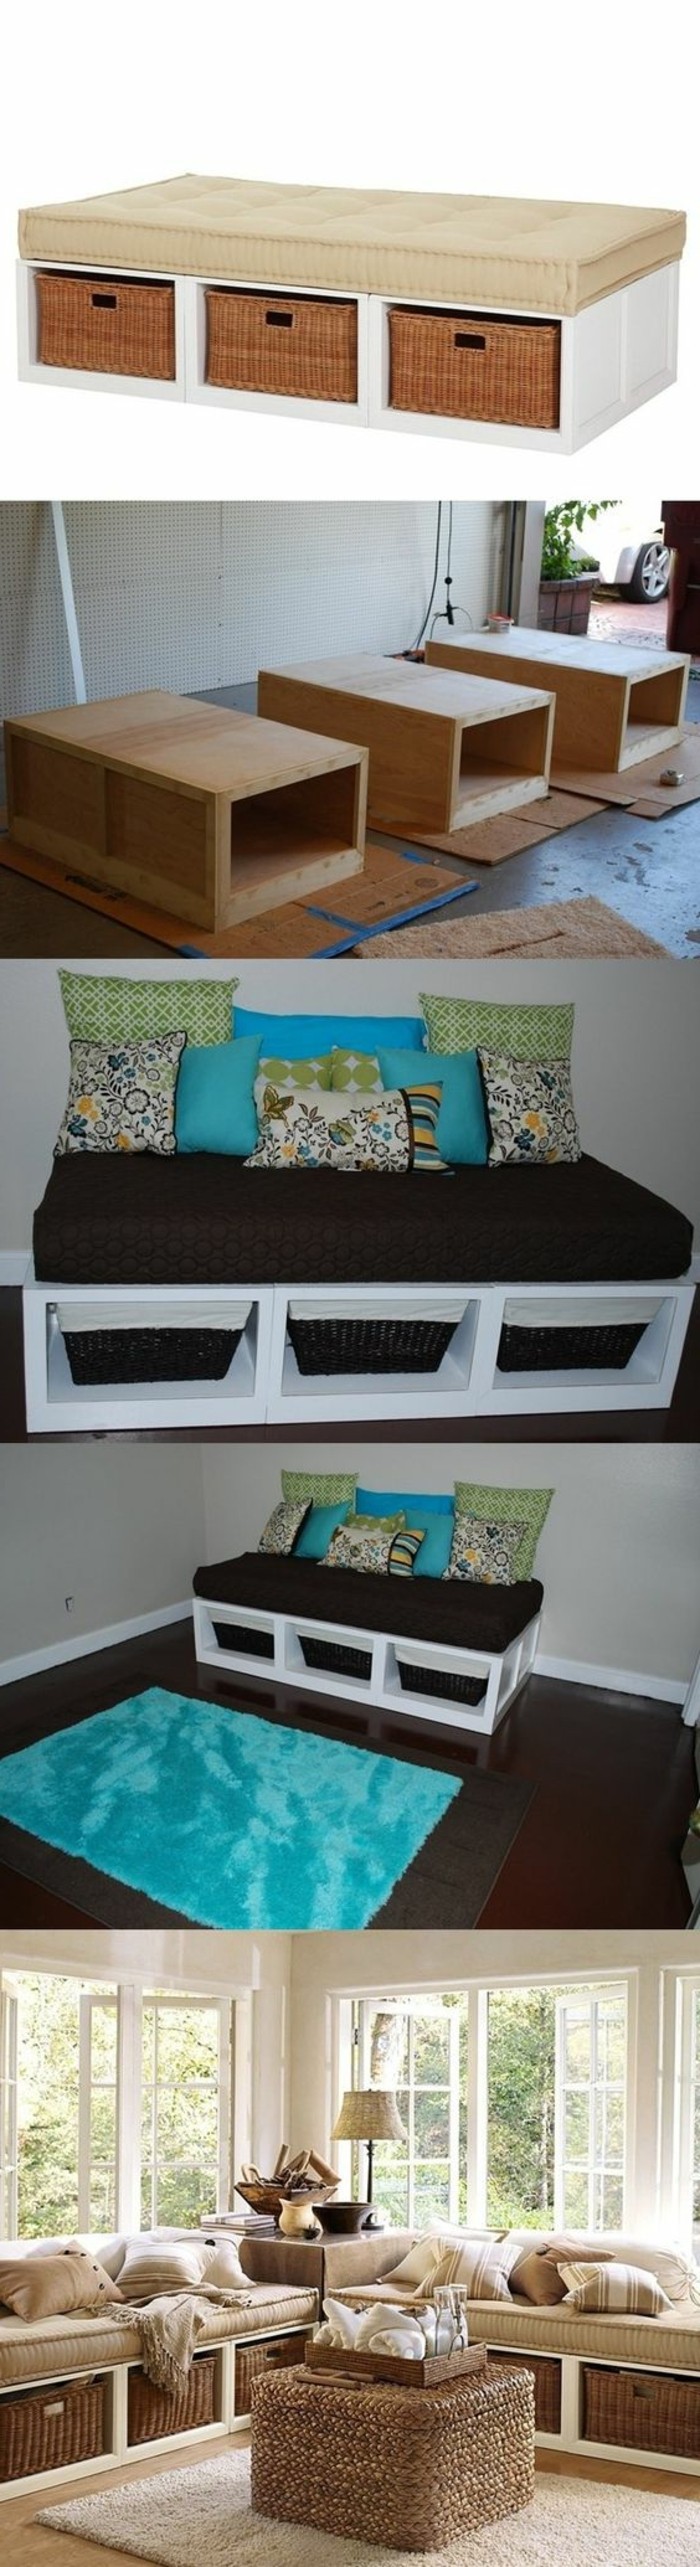 DIY-moebel-kreativno-wohnideen kauč od-drveta i pletene košare-se-baeuen